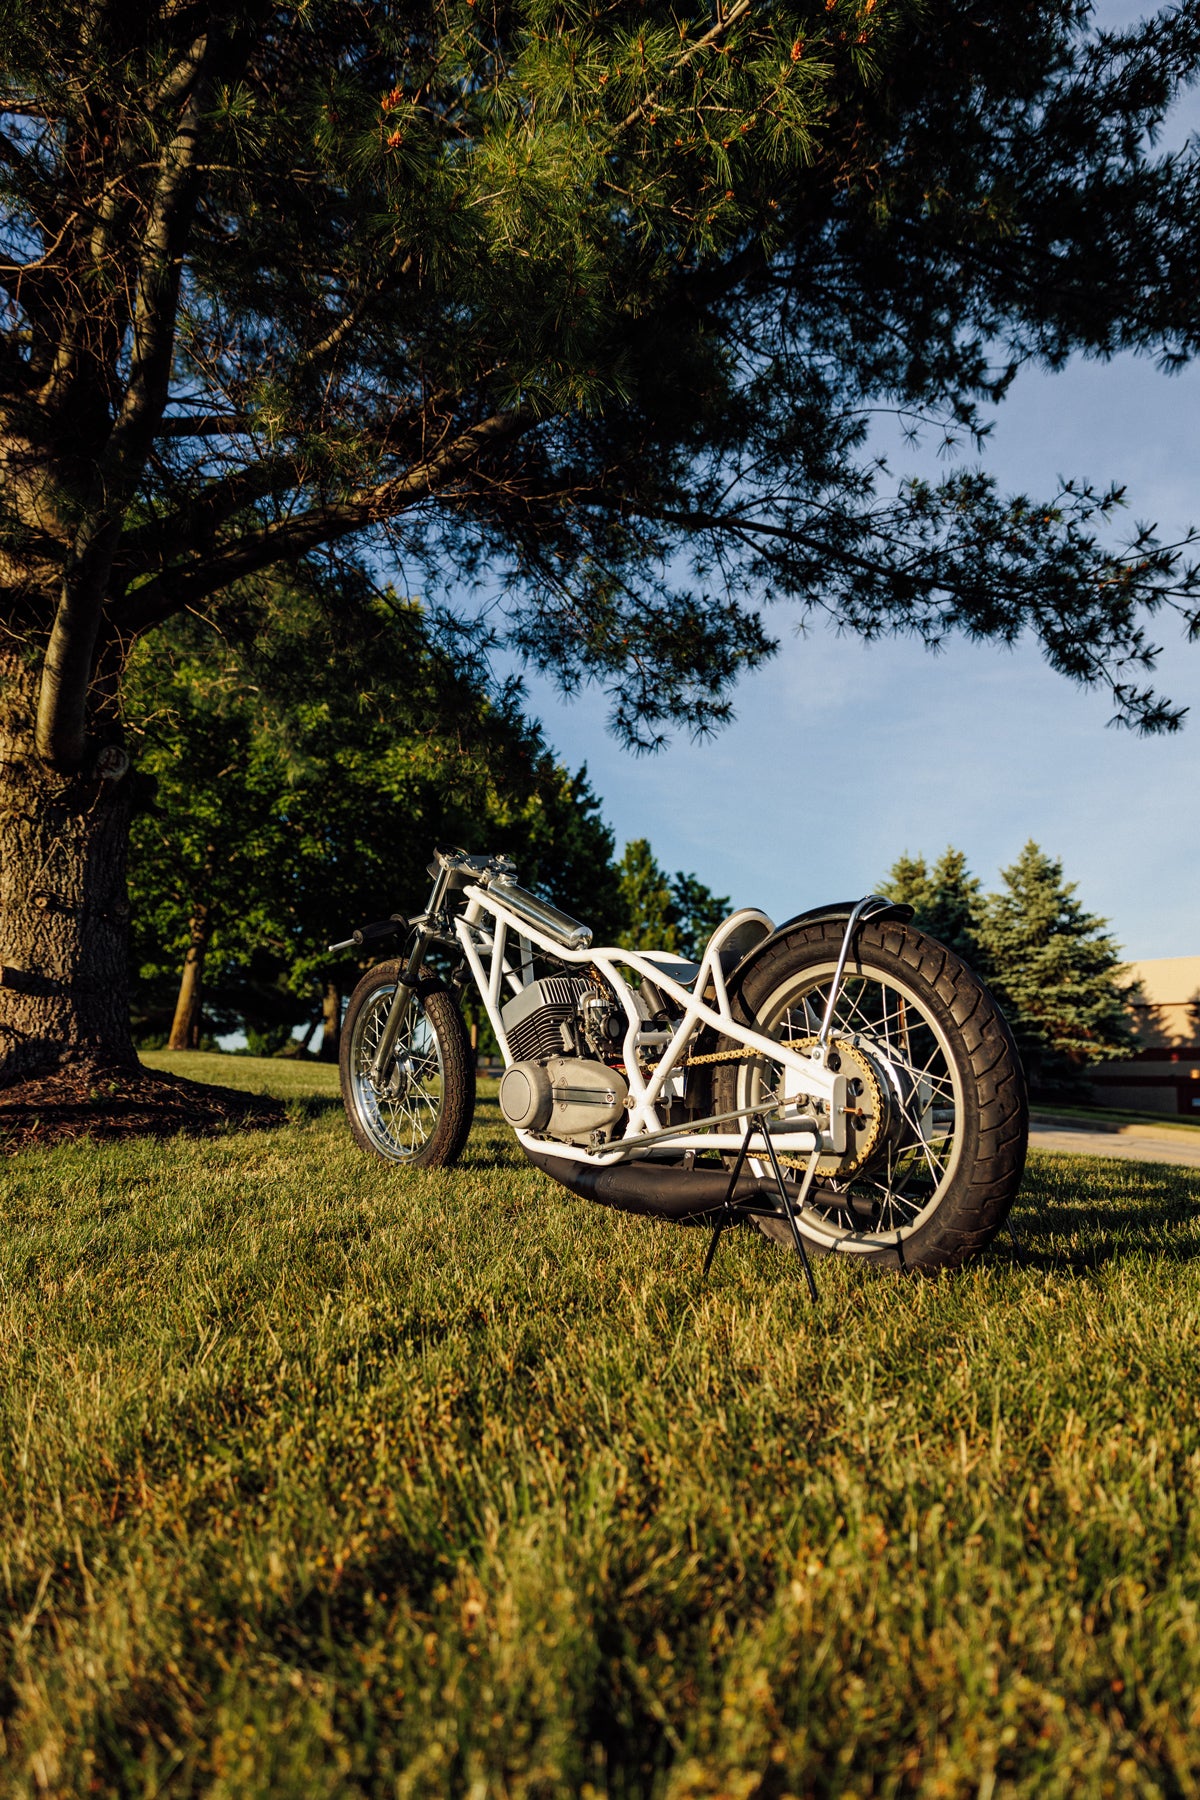 Yamaha RD250 Dragster motorcycle Pittsburgh Moto Pecharka Mazza